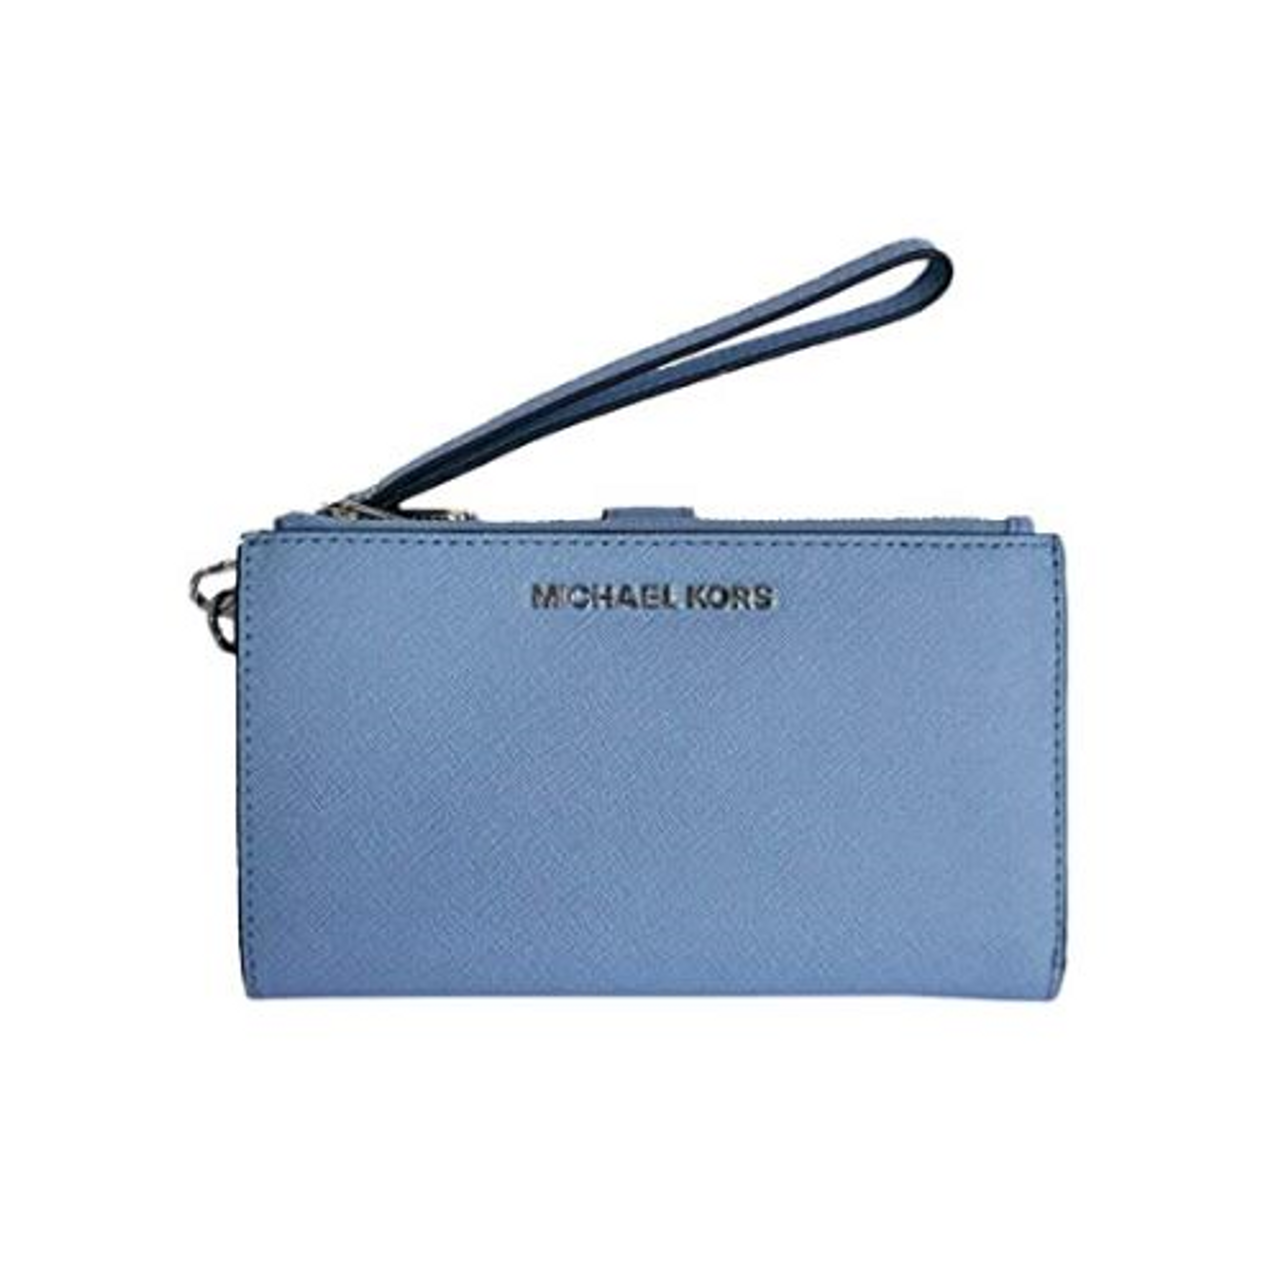 michael kors powder blue wallet